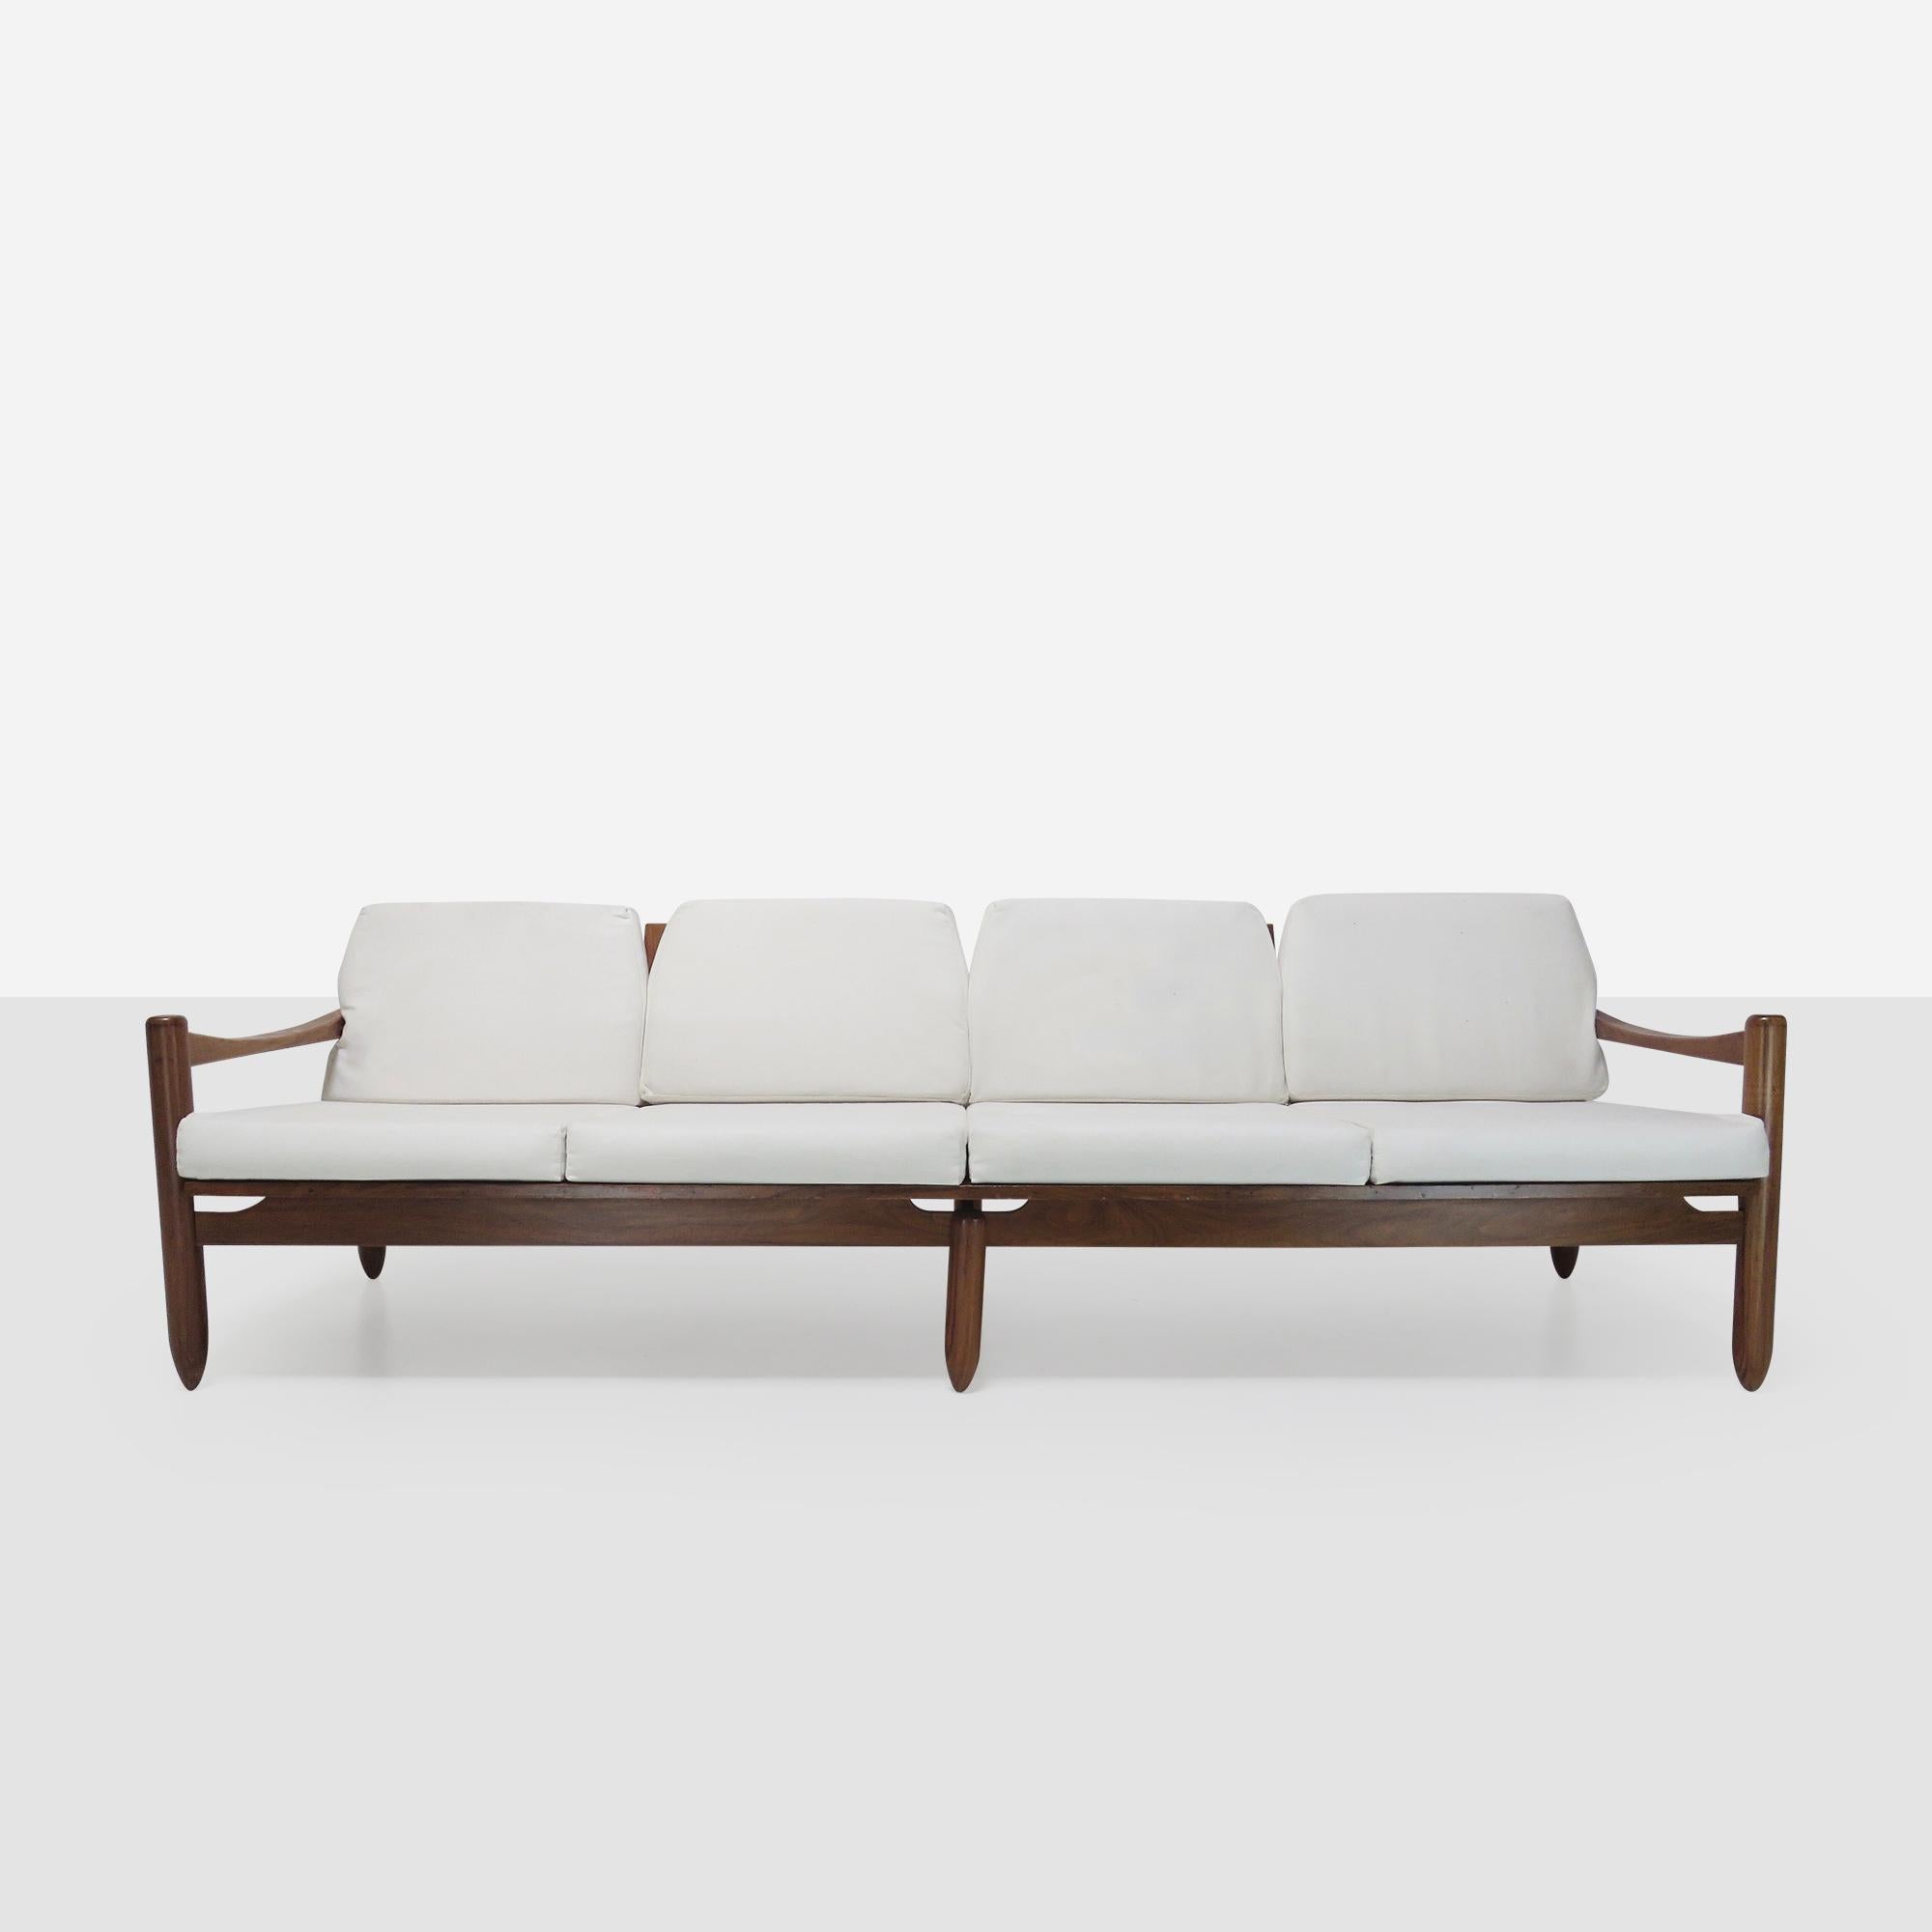 Mid-20th Century Brazilian Rosewood Sofa by Liceu de Arte e Officios For Sale